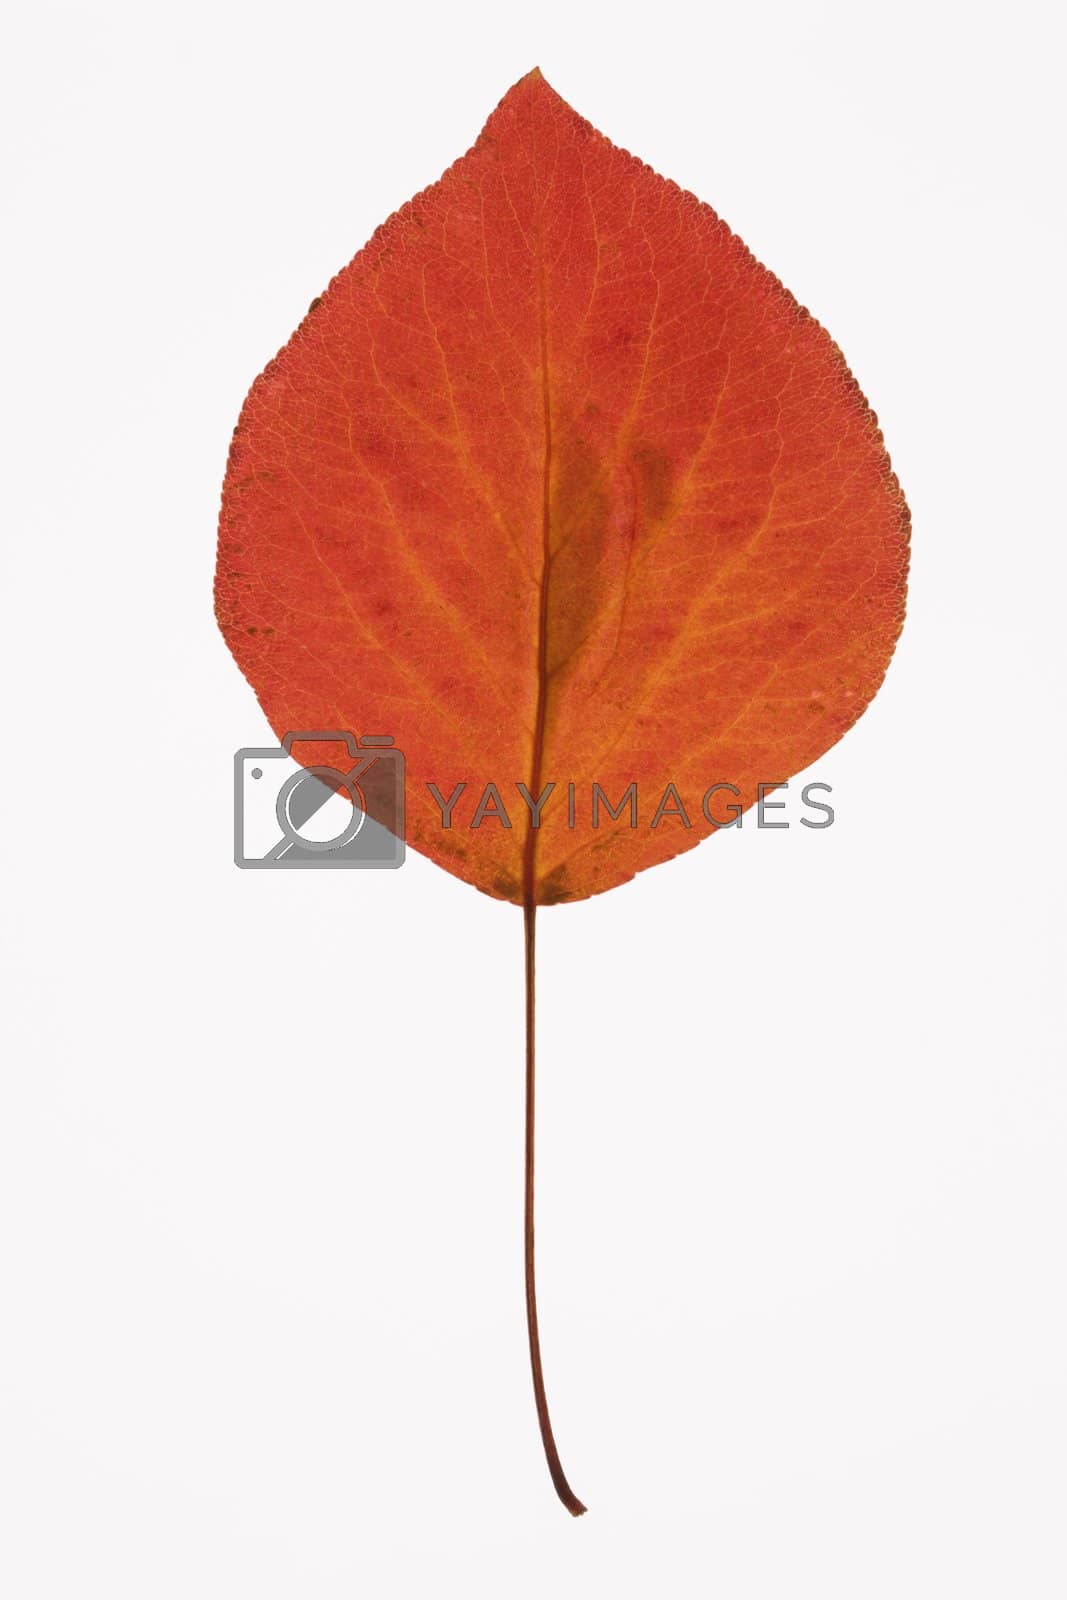 Royalty free image of Bradford Pear leaf. by iofoto